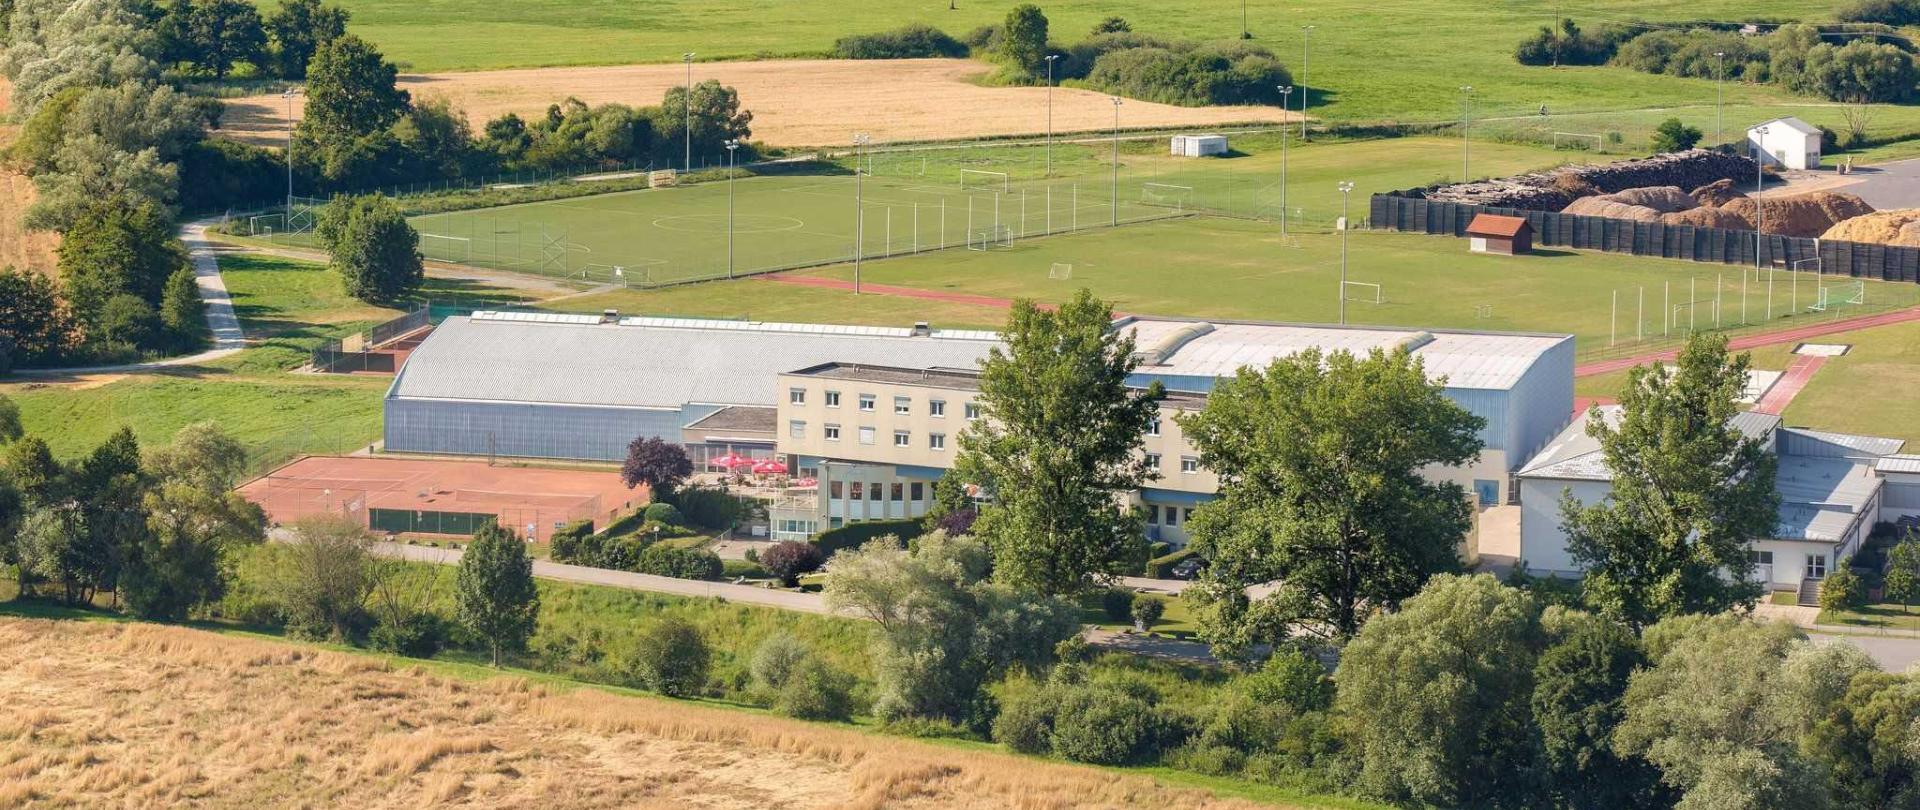 Sporthotel AktivPark Güssing